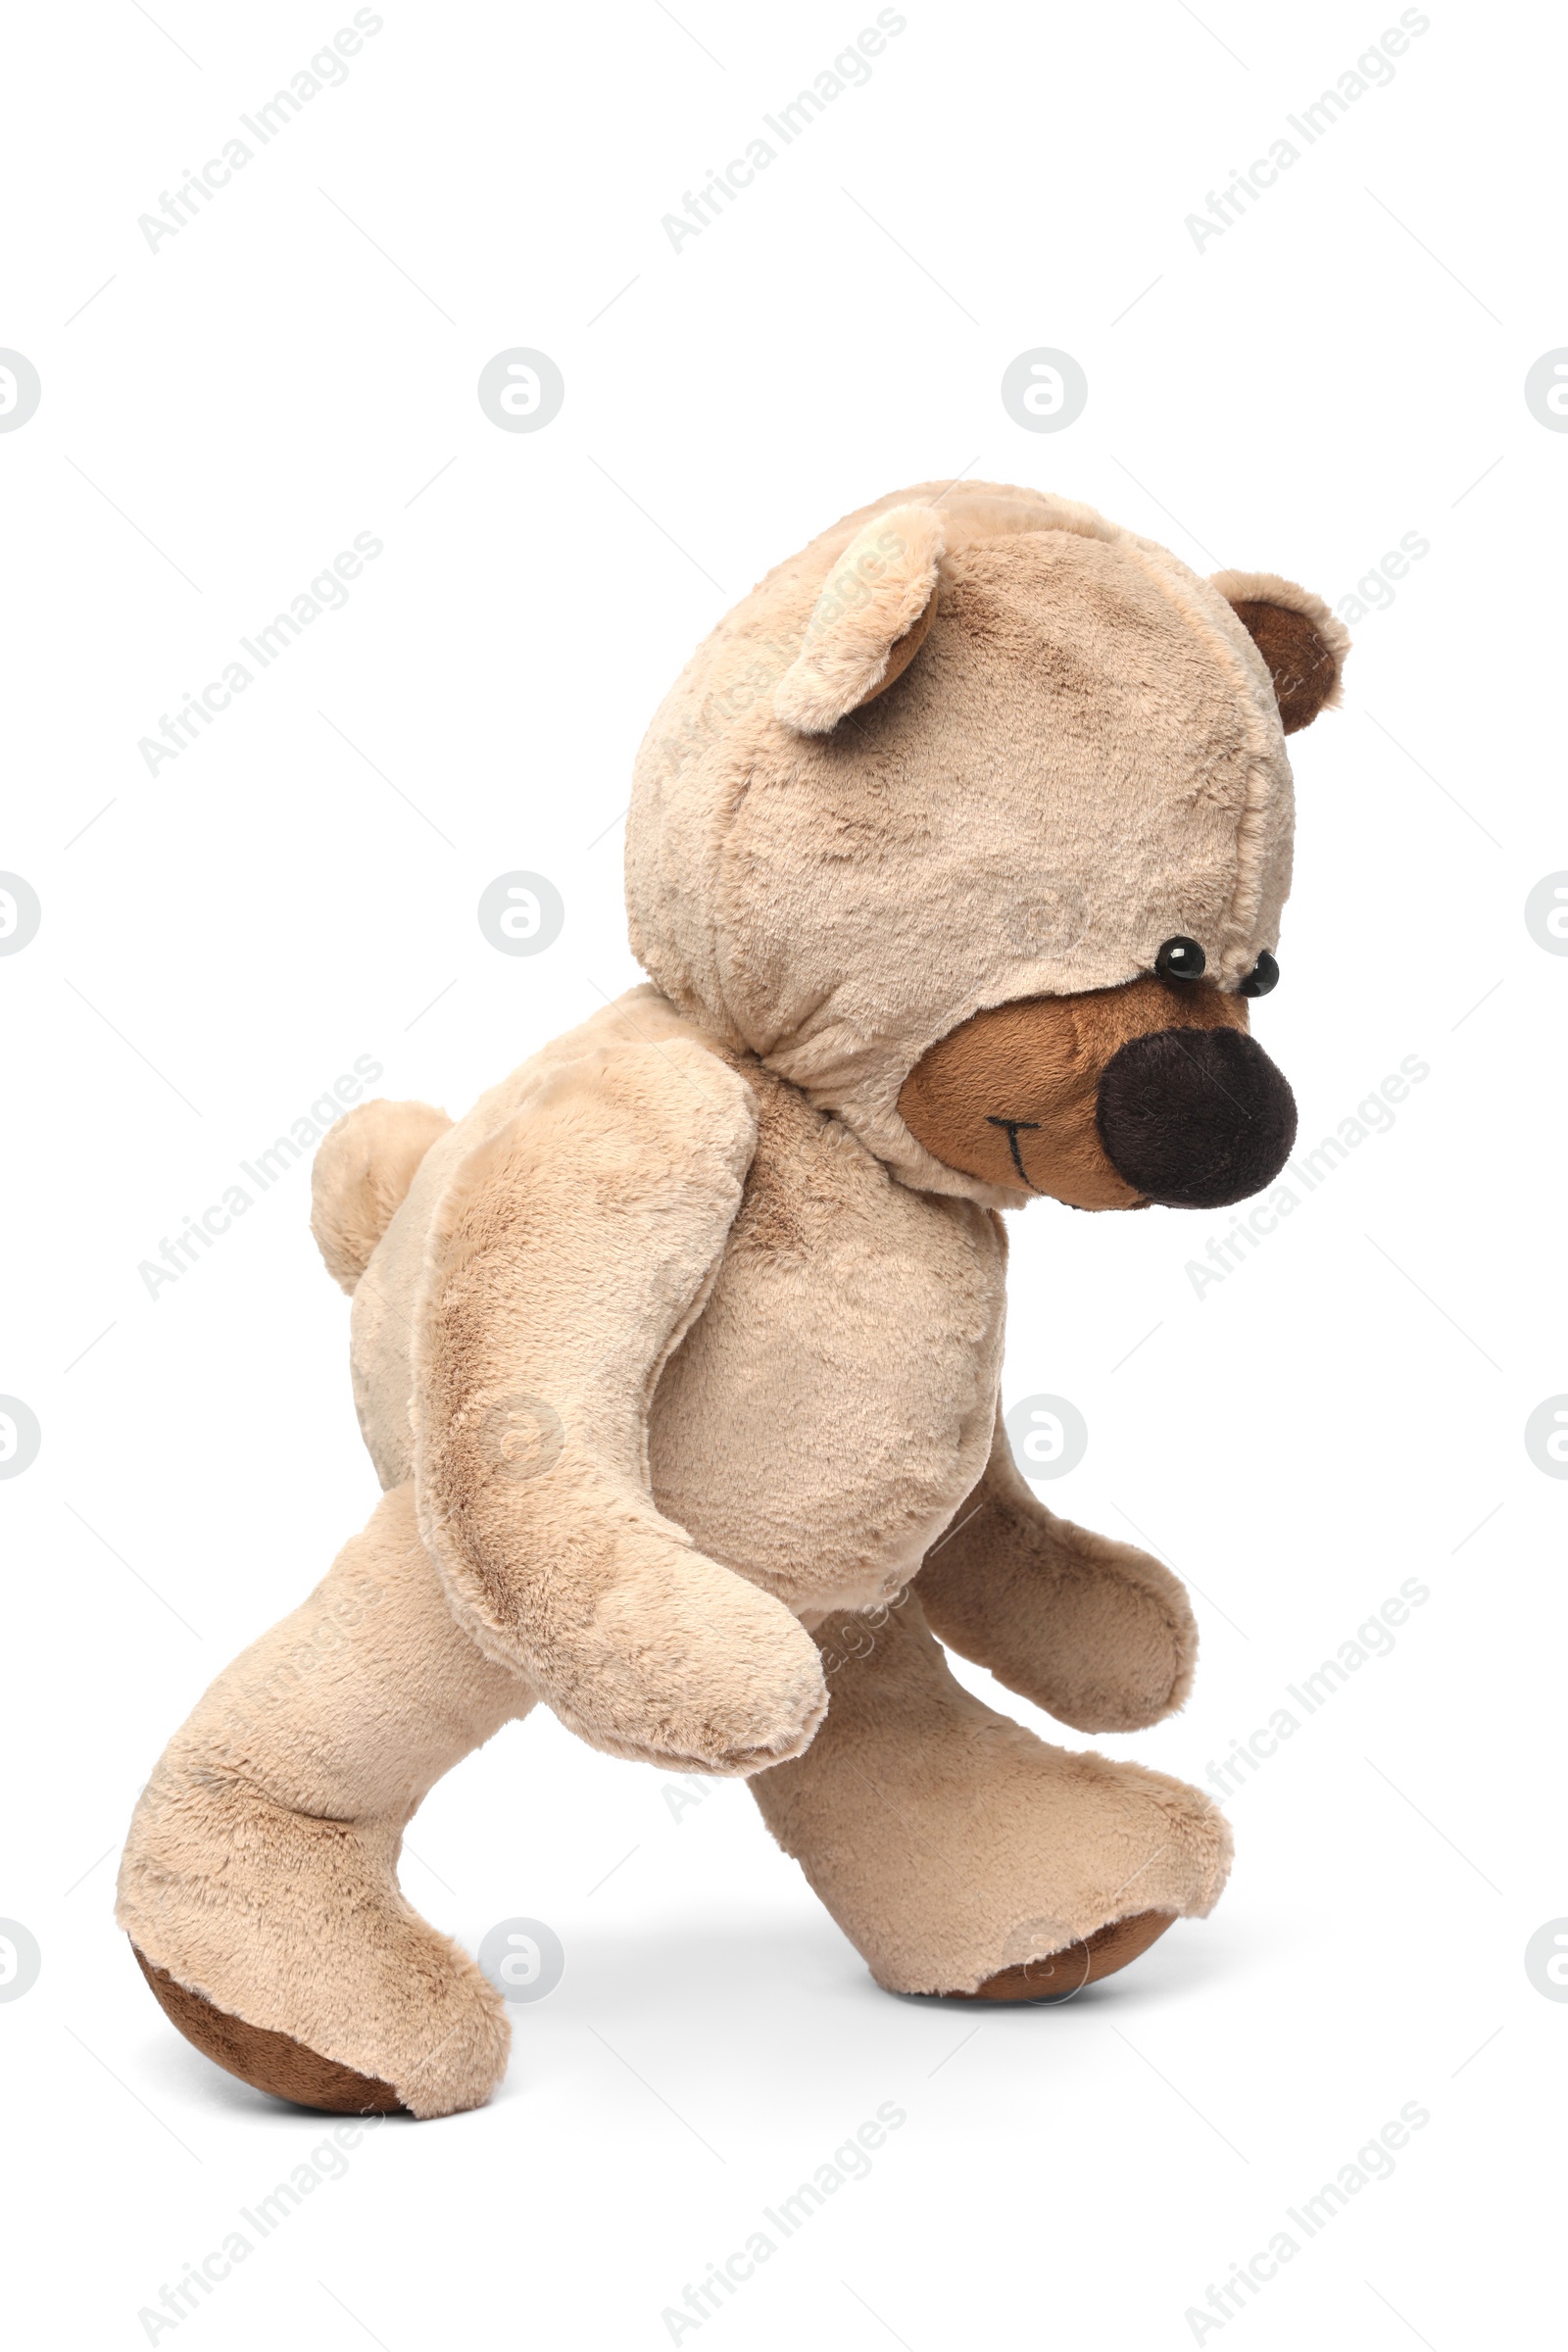 Photo of Cute teddy bear walking on white background